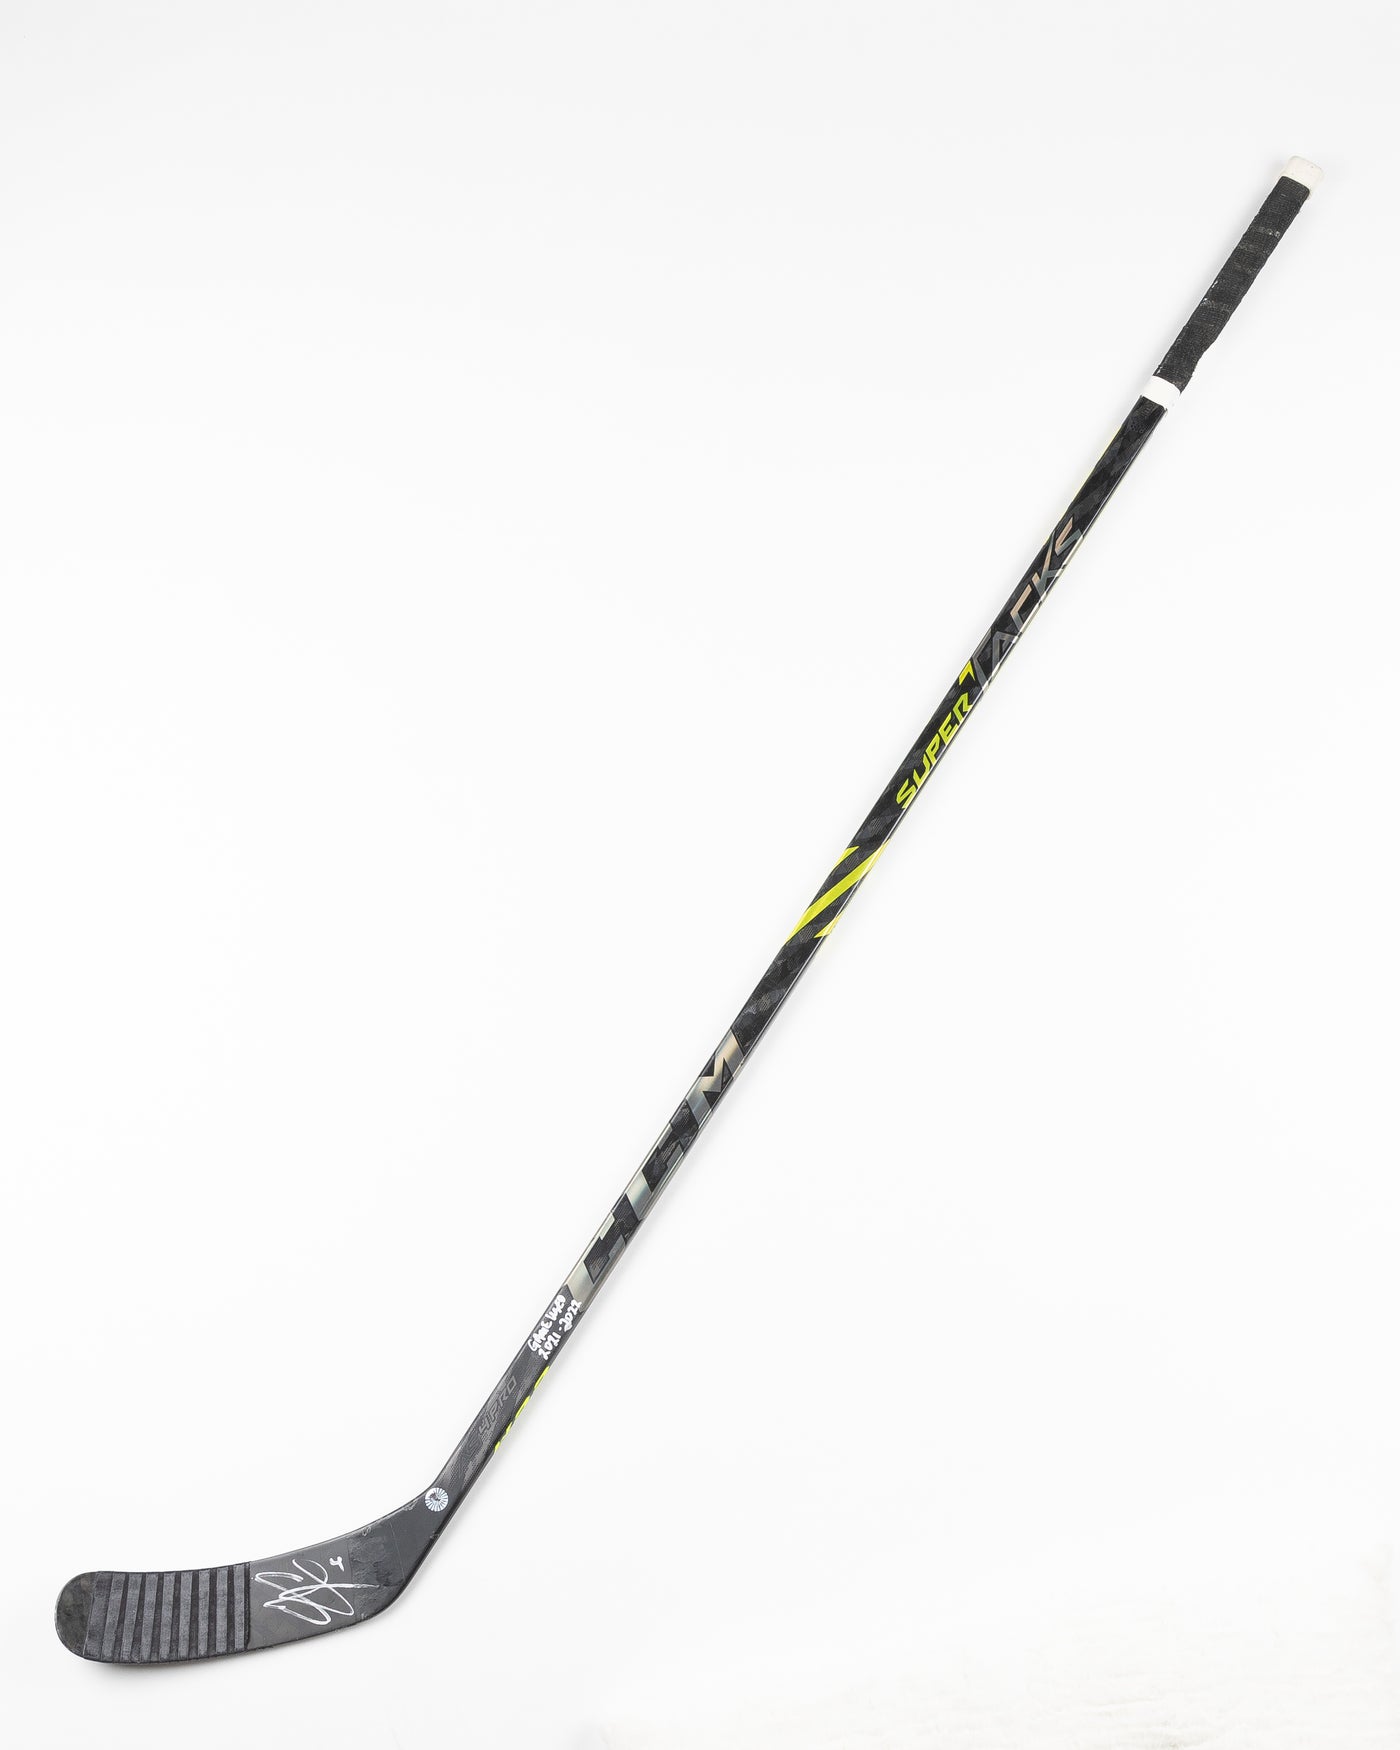 signed and game used Chicago Blackhawks Seth Jones hockey stick - front lay flat